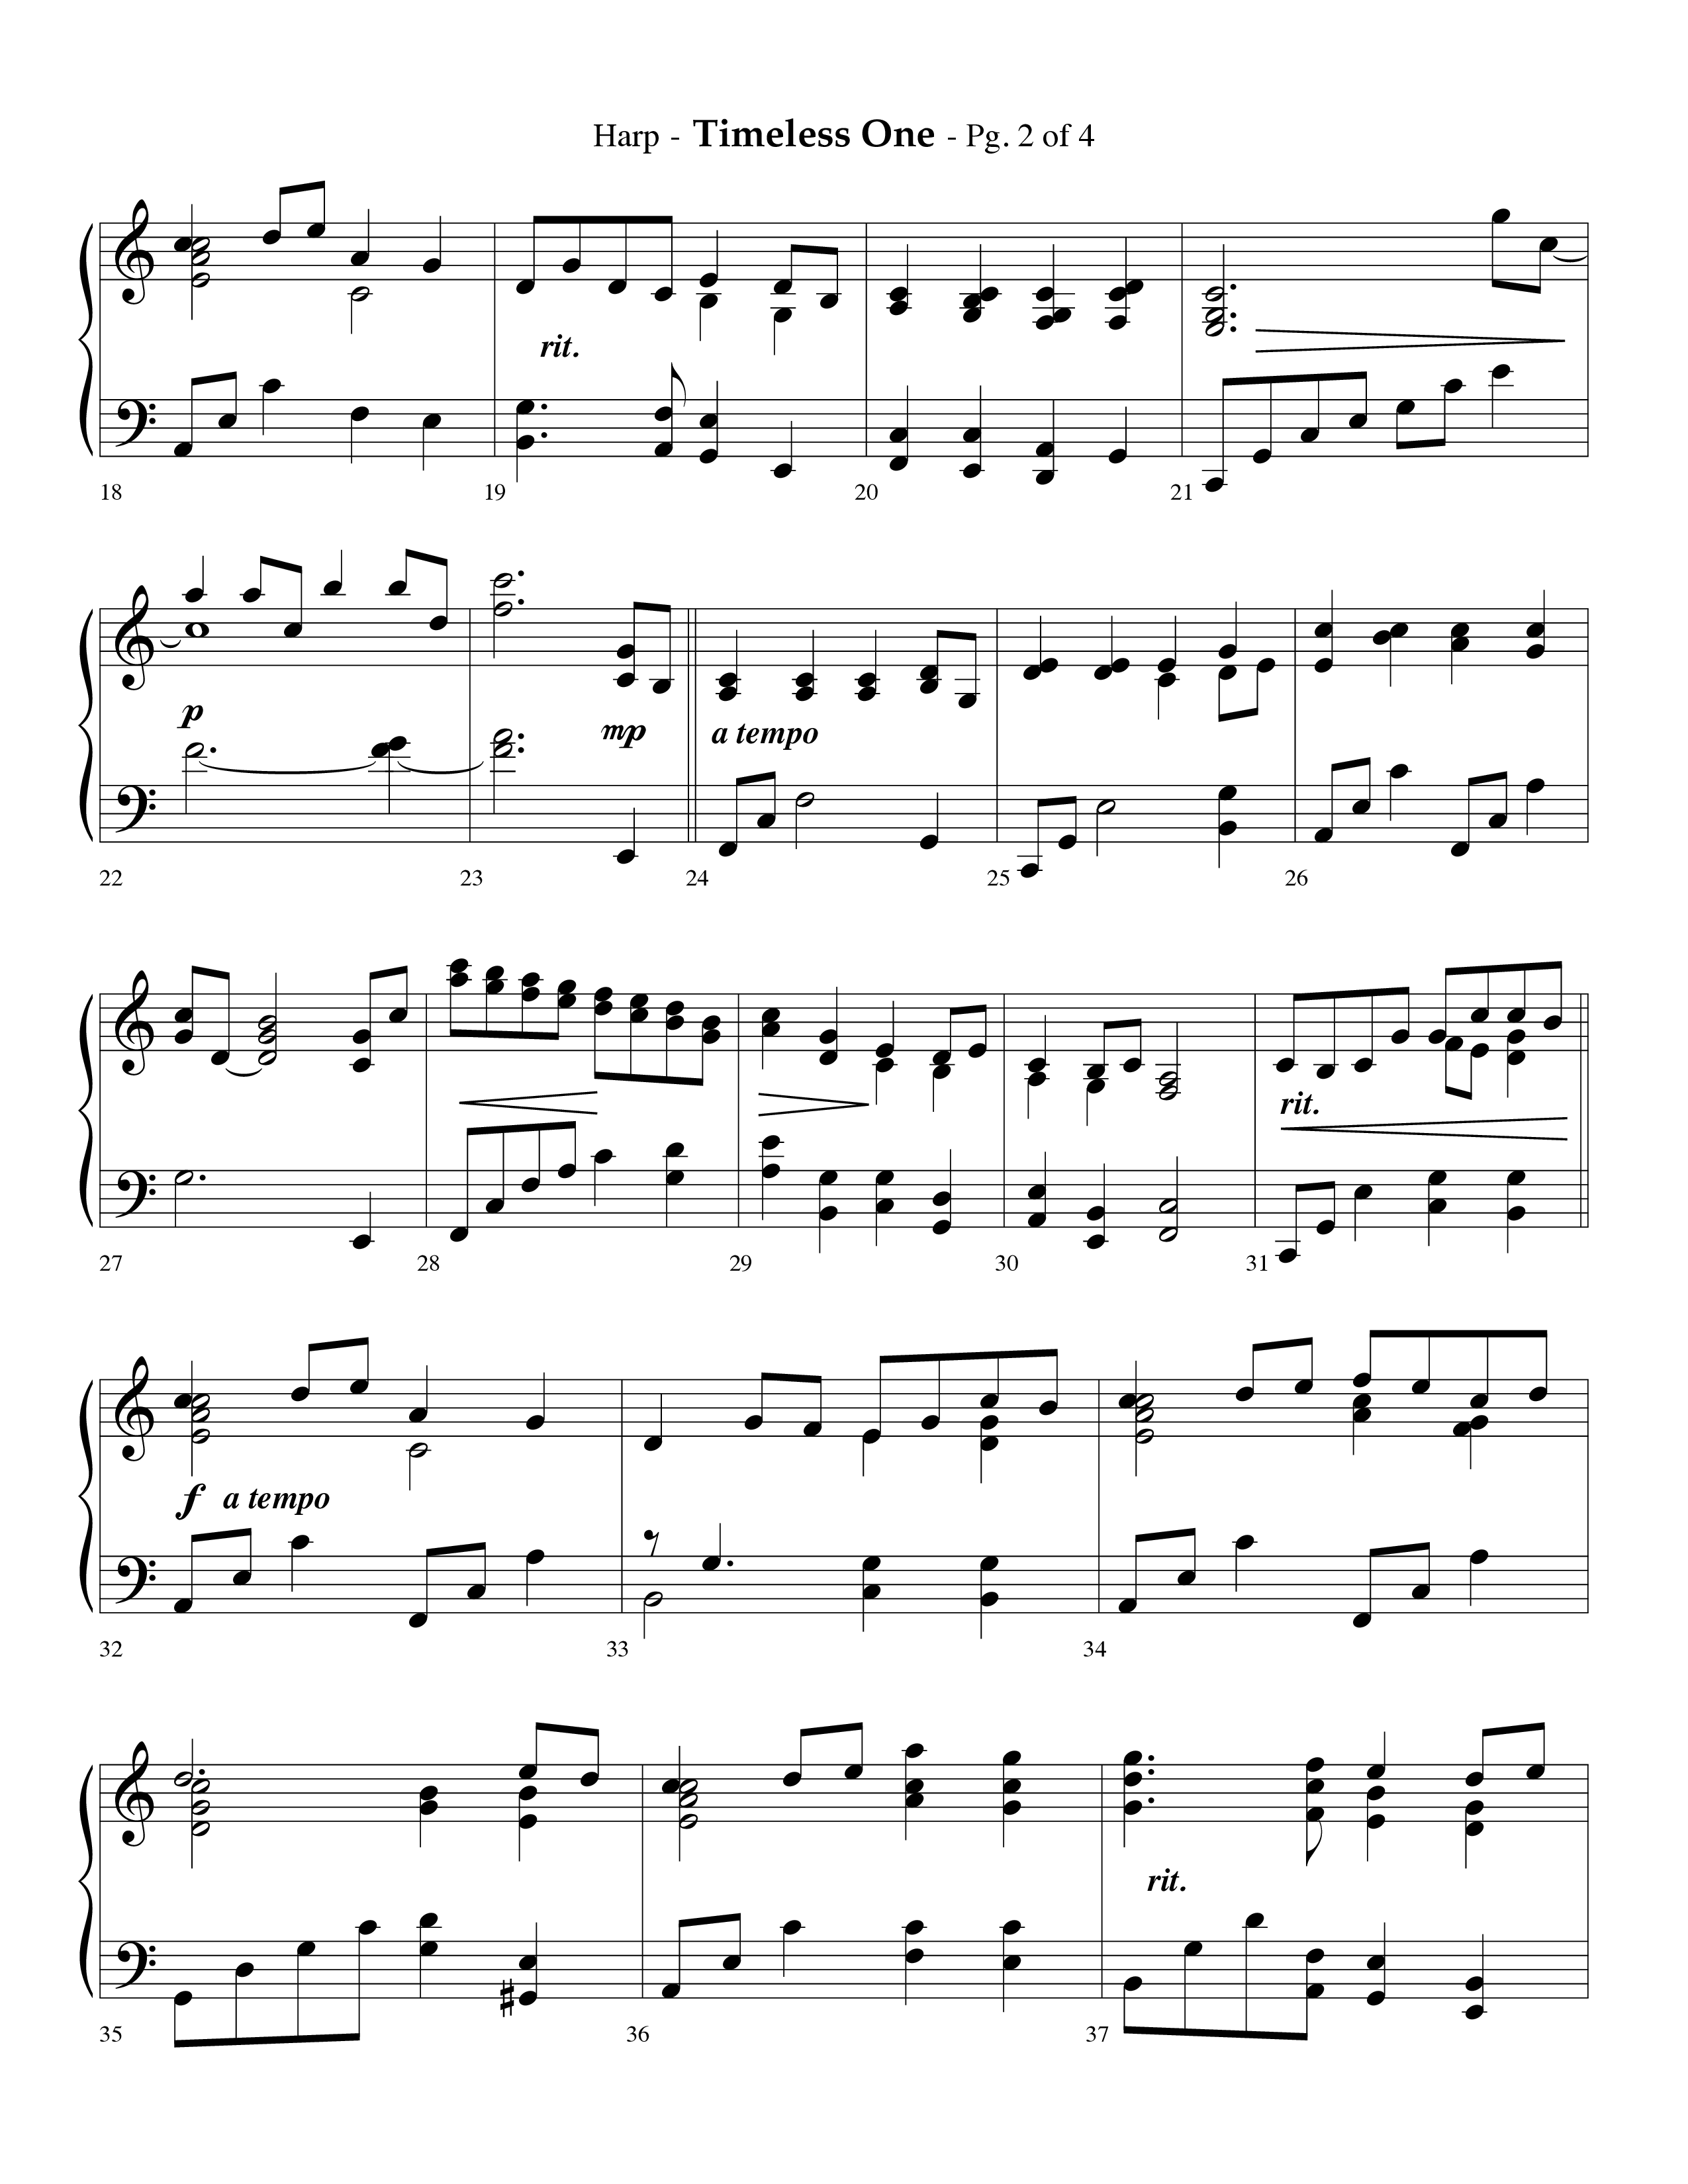 Timeless One (Choral Anthem SATB) Harp (Lifeway Choral / Arr. Phillip Keveren)